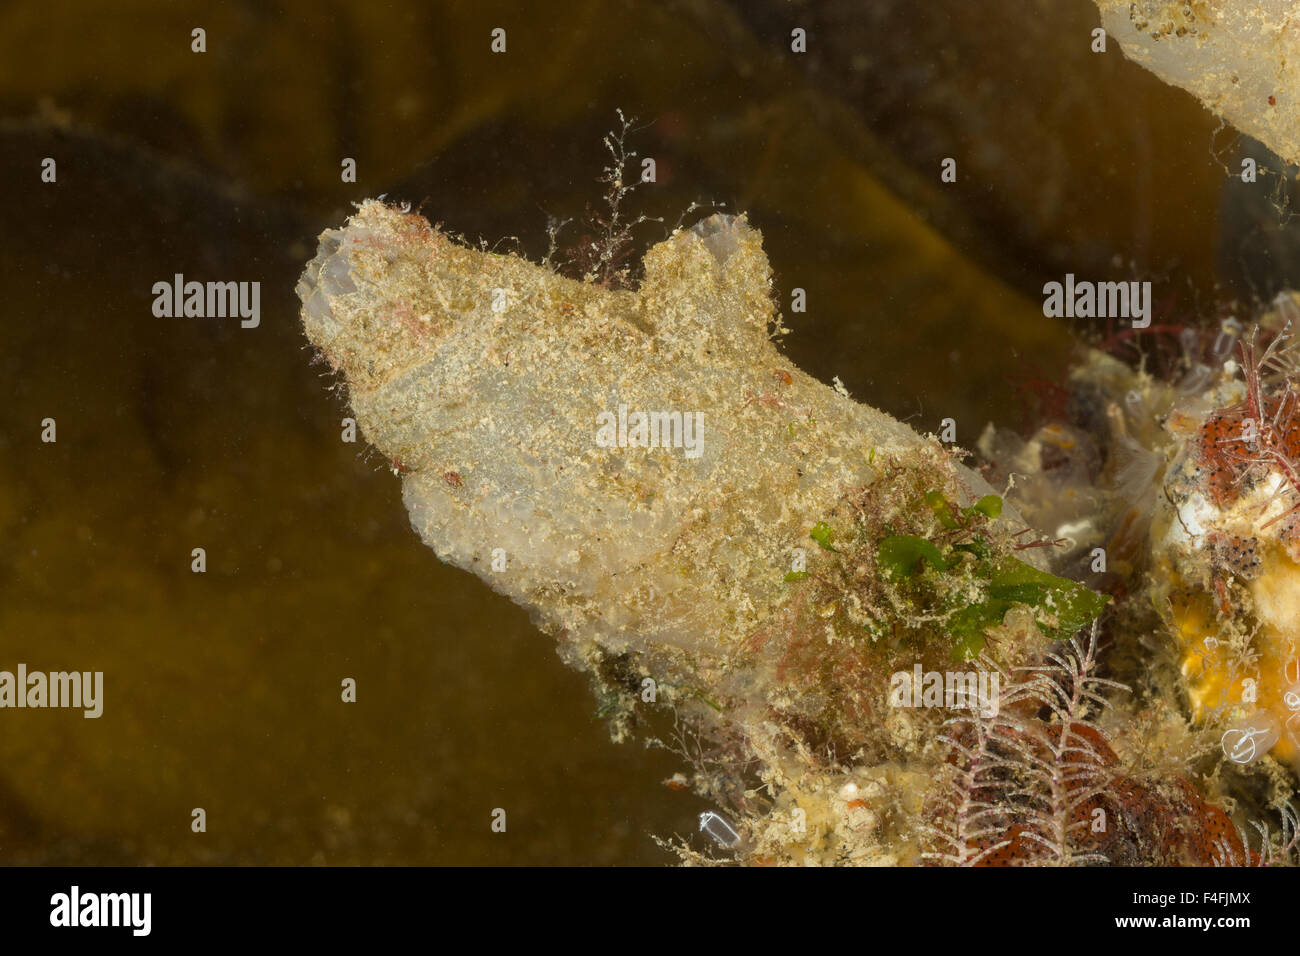 Dirty sea-squirt, Spritz-Seescheide, Spritzseescheide, Spritz-Ascidie, Spritzascidie, Ascidiella aspersa, Ascidia aspersa Stock Photo